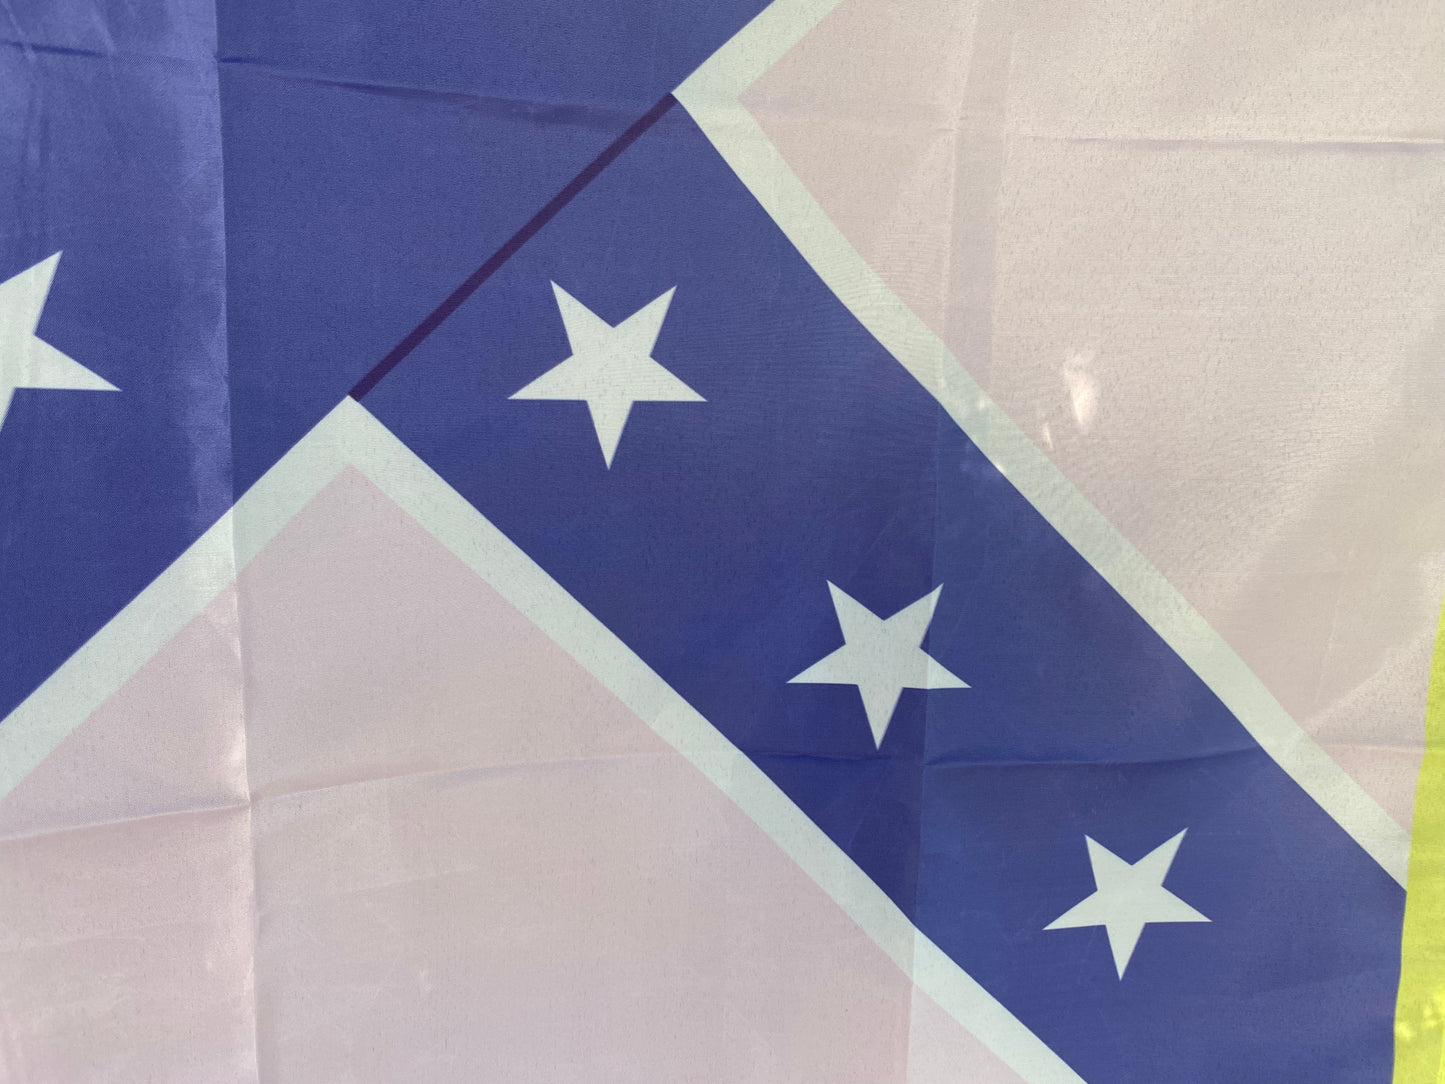 5th North Carolina "Silk Issue" House Flag